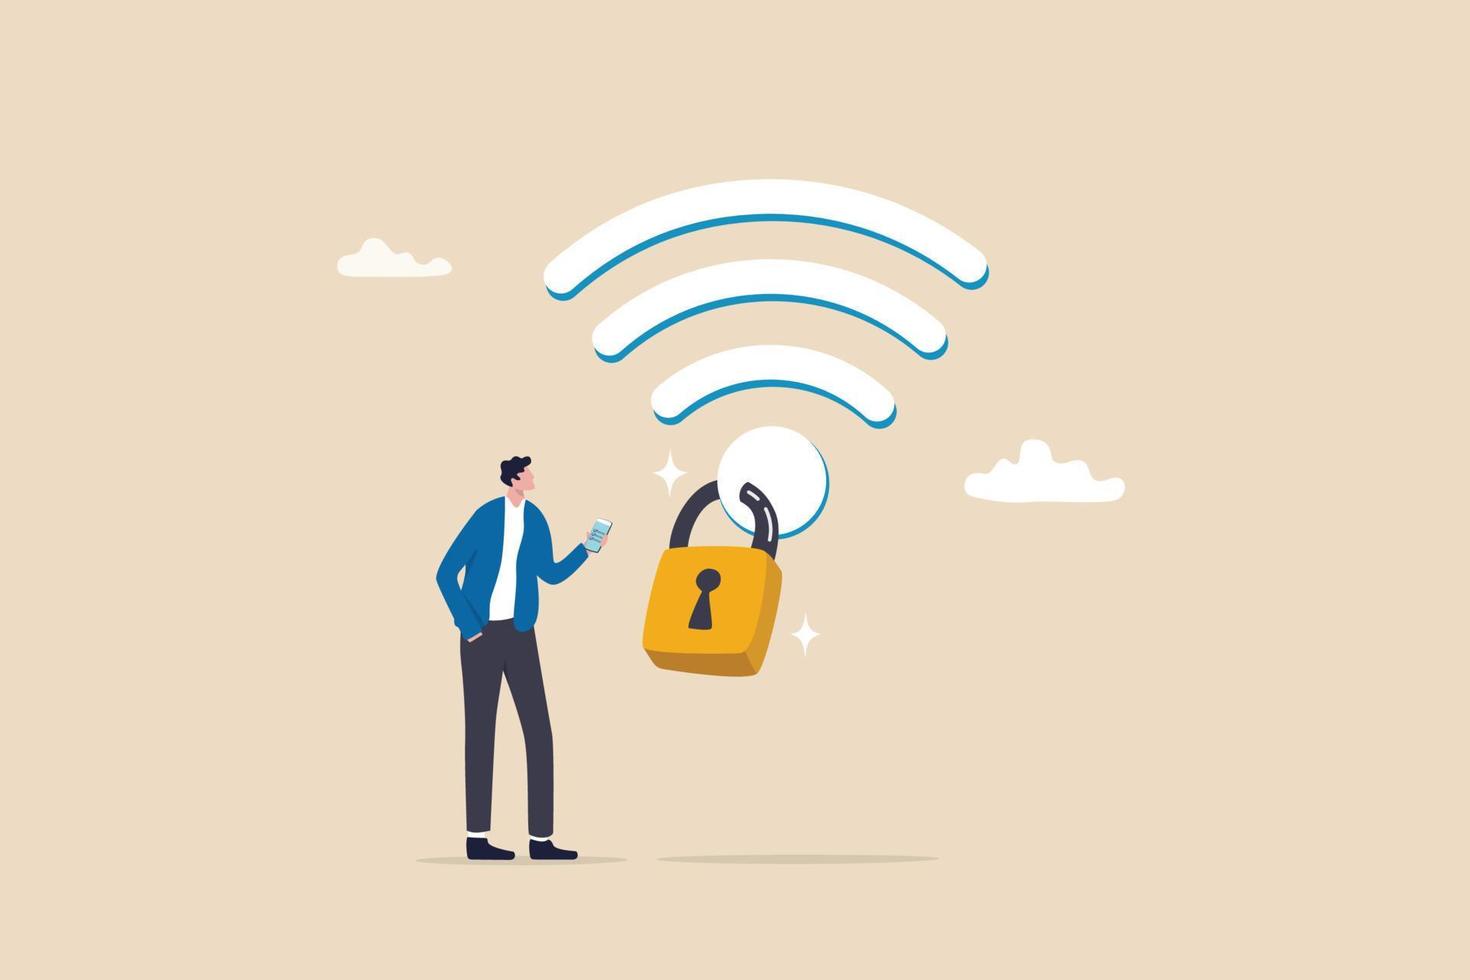 Wifi cifrado, inalámbrico seguridad o la seguridad para Internet conexión, red proteccion o móvil acceso, contraseña cifrado concepto, hombre móvil usuario conectar a Wifi red con candado encriptación vector